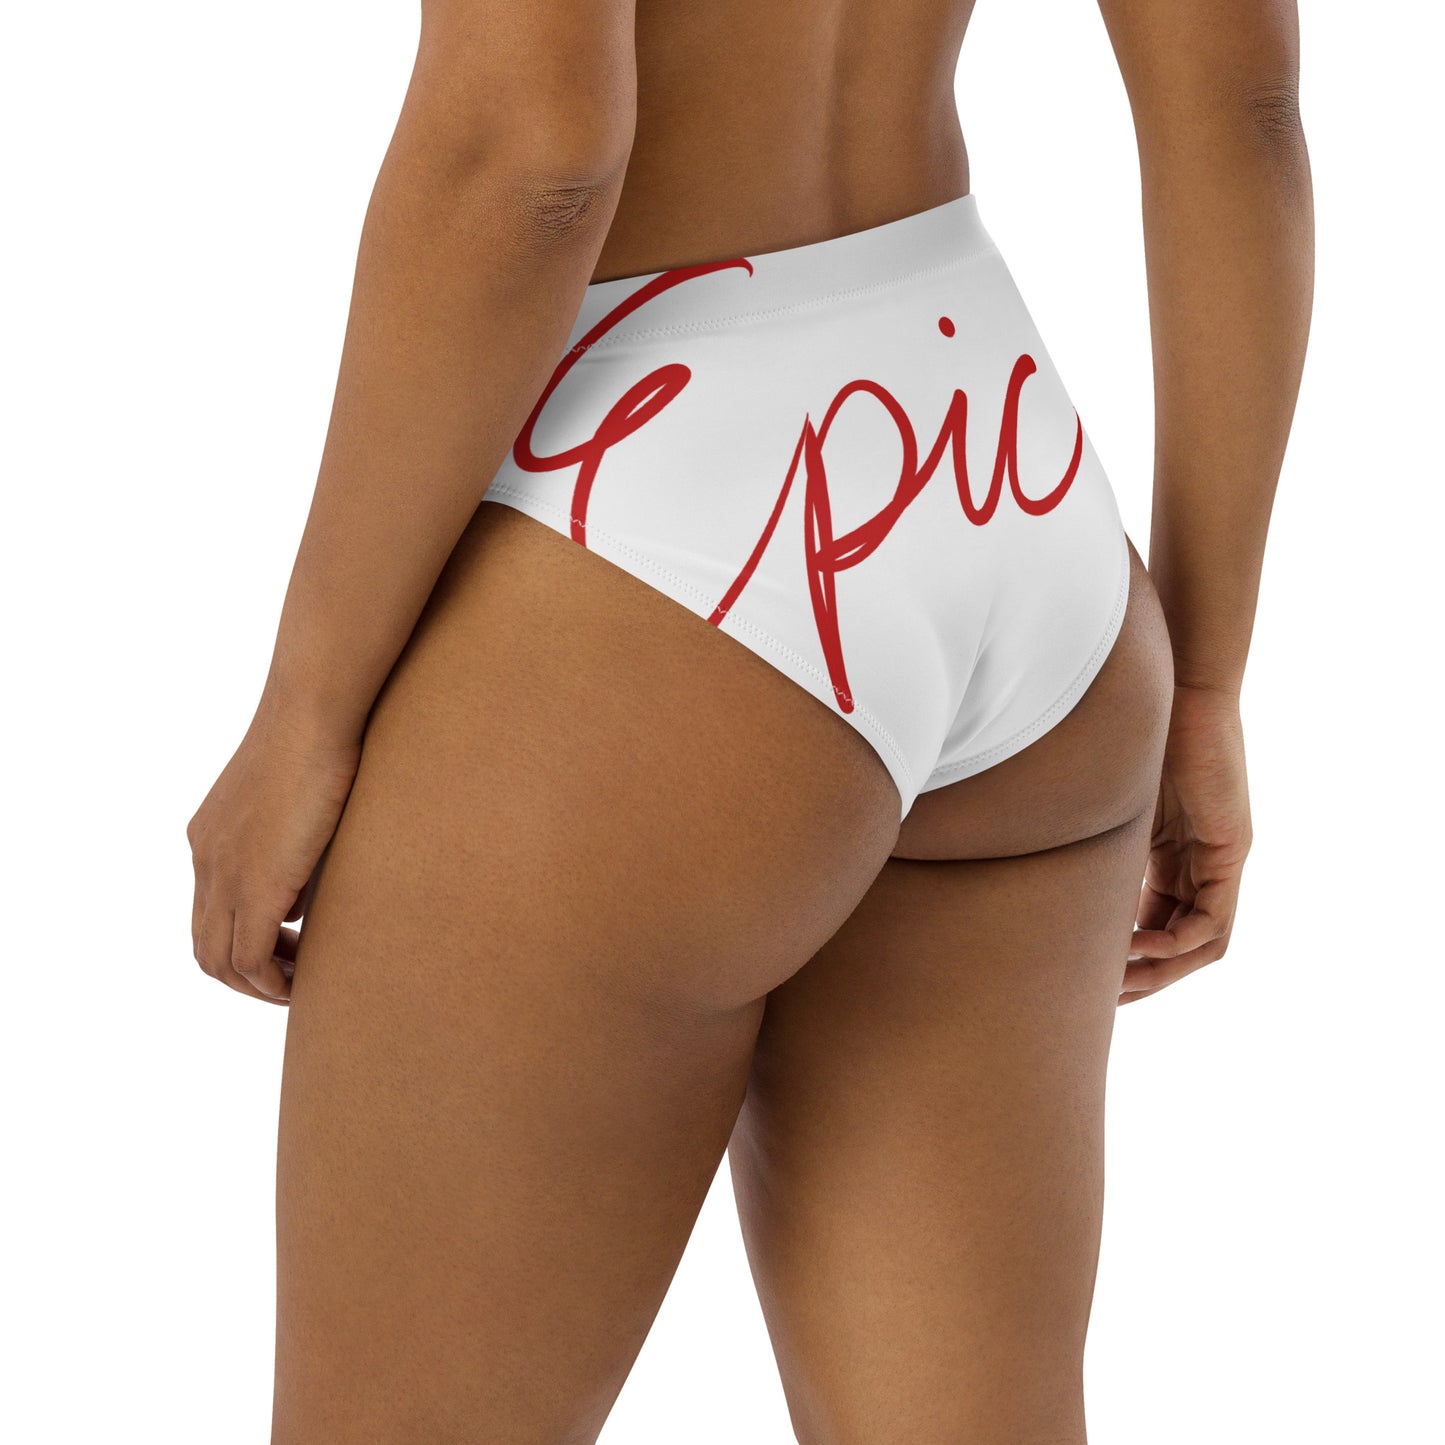 "Epic" Recycled High Waisted Bikini Bottom